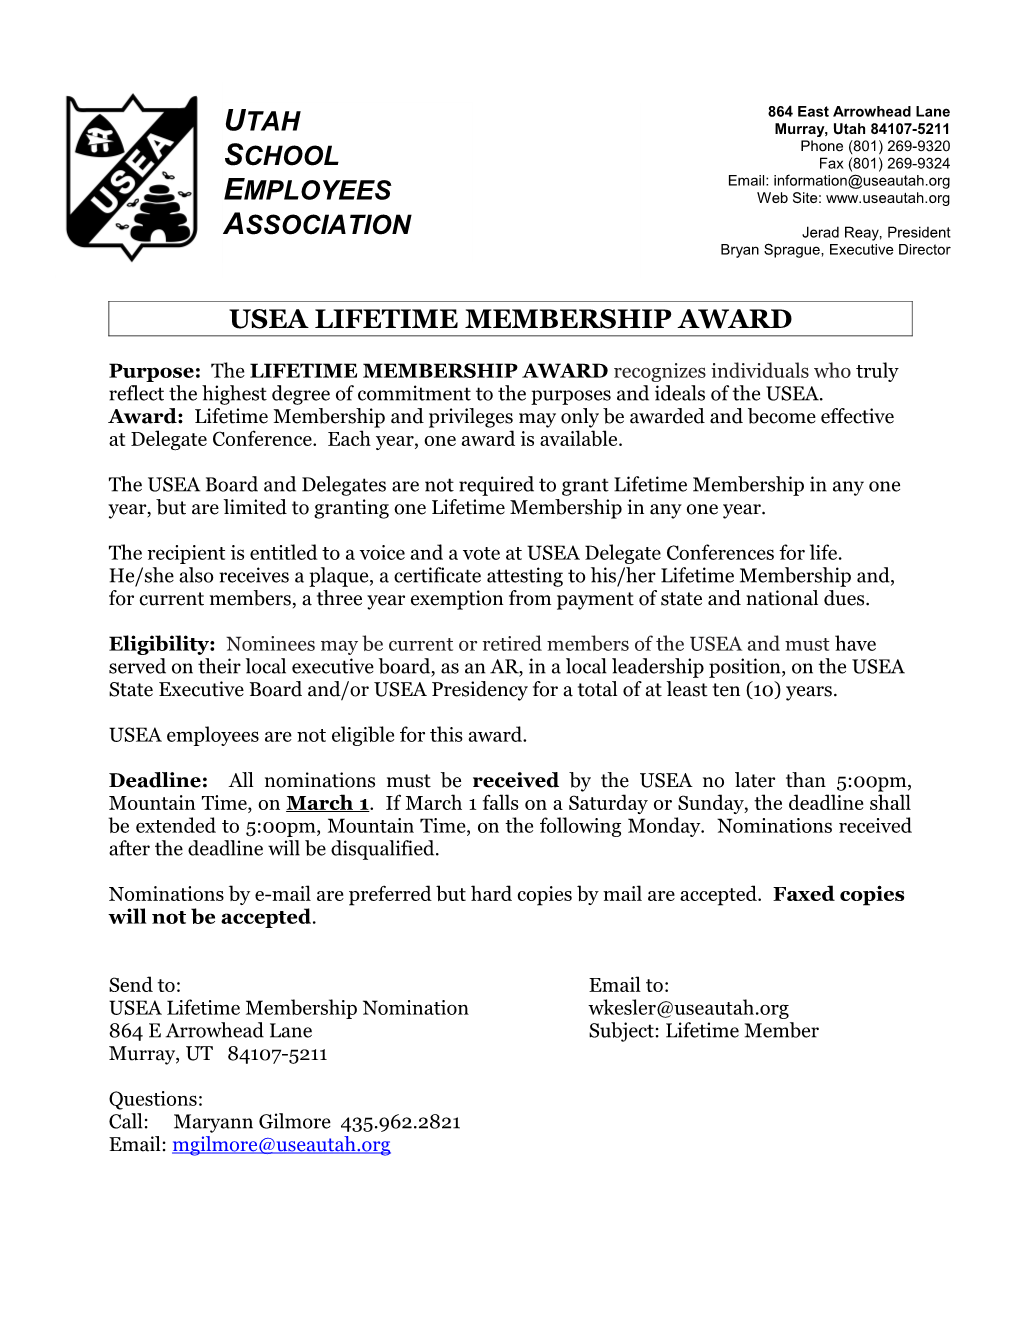 Usealifetime Membership Award